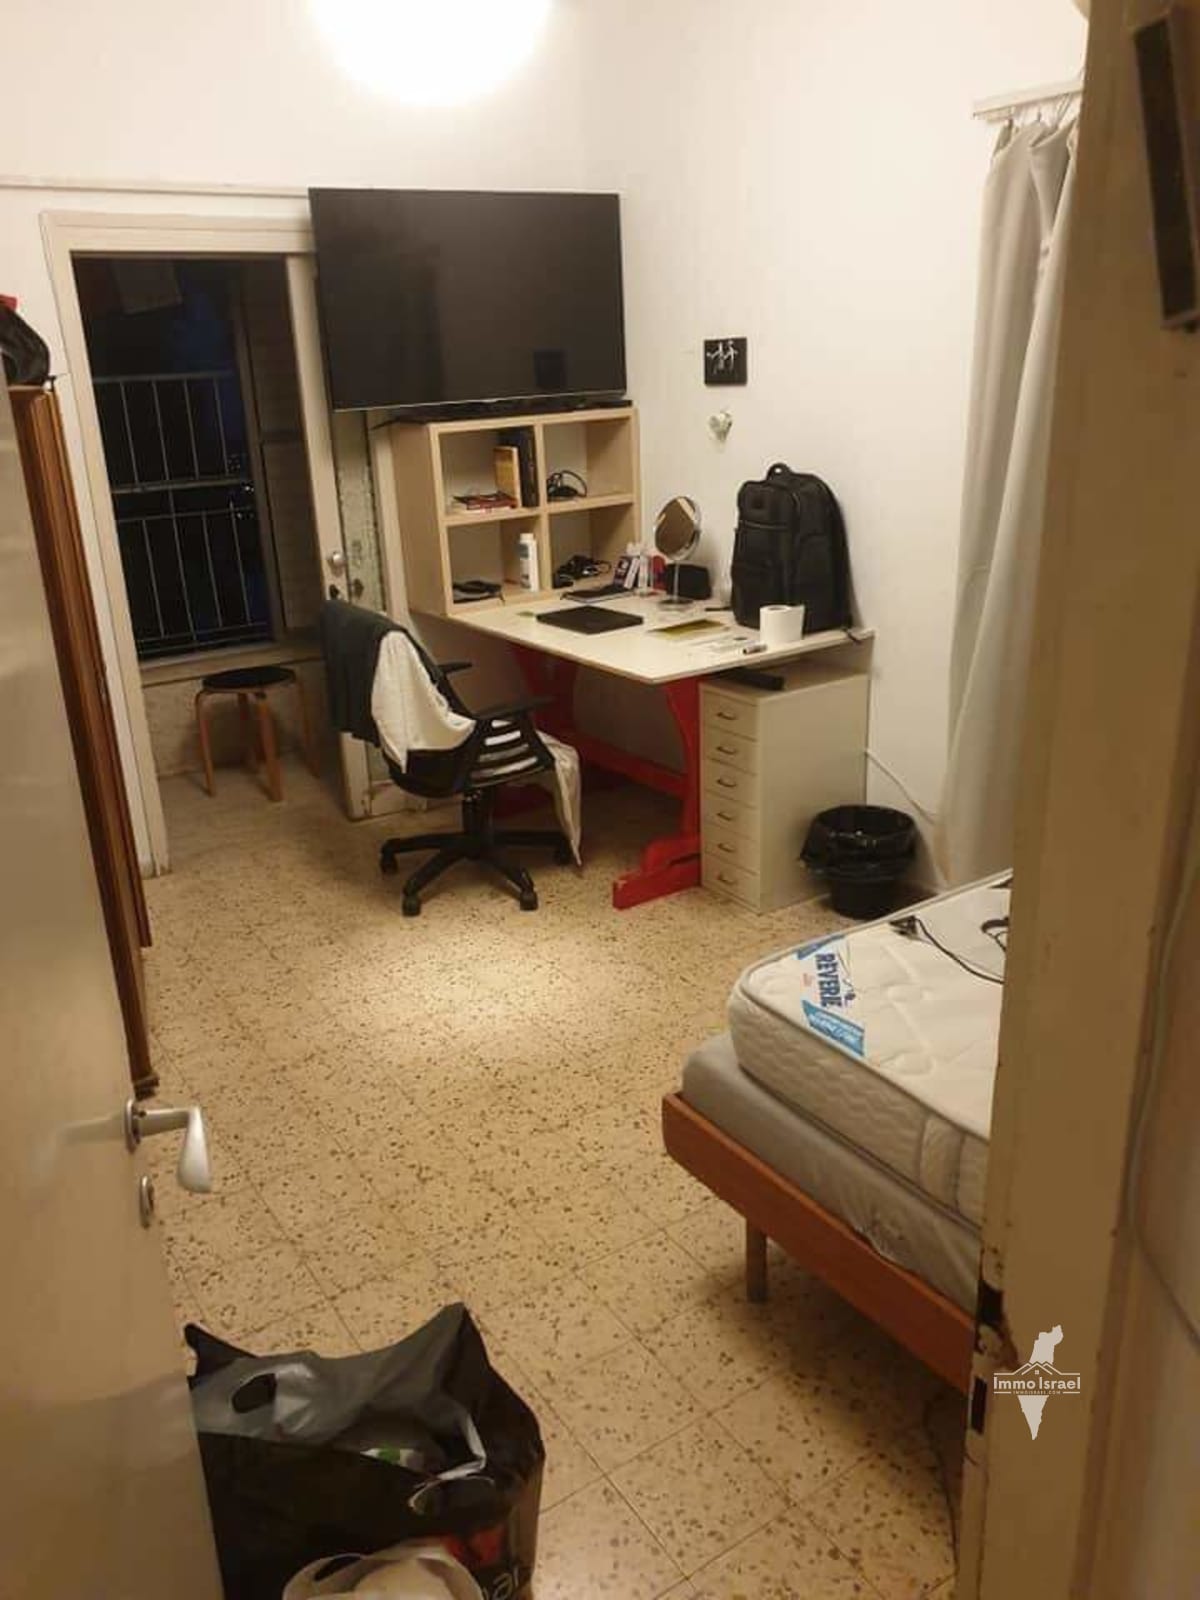 For Rent: 4-Room Apartment on Ibn Gabirol/HaShoftim